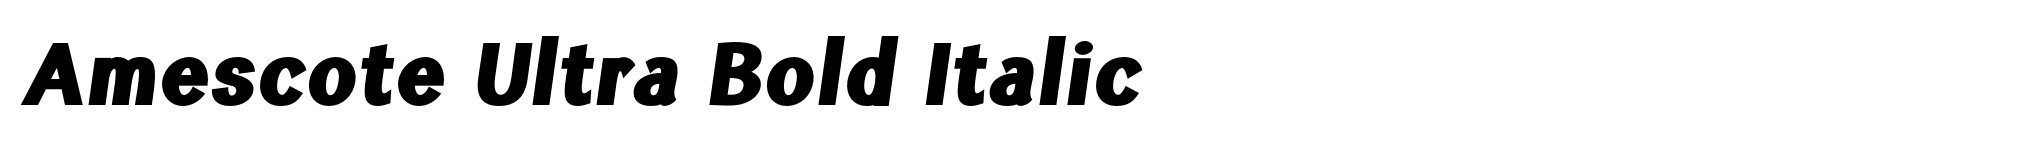 Amescote Ultra Bold Italic image